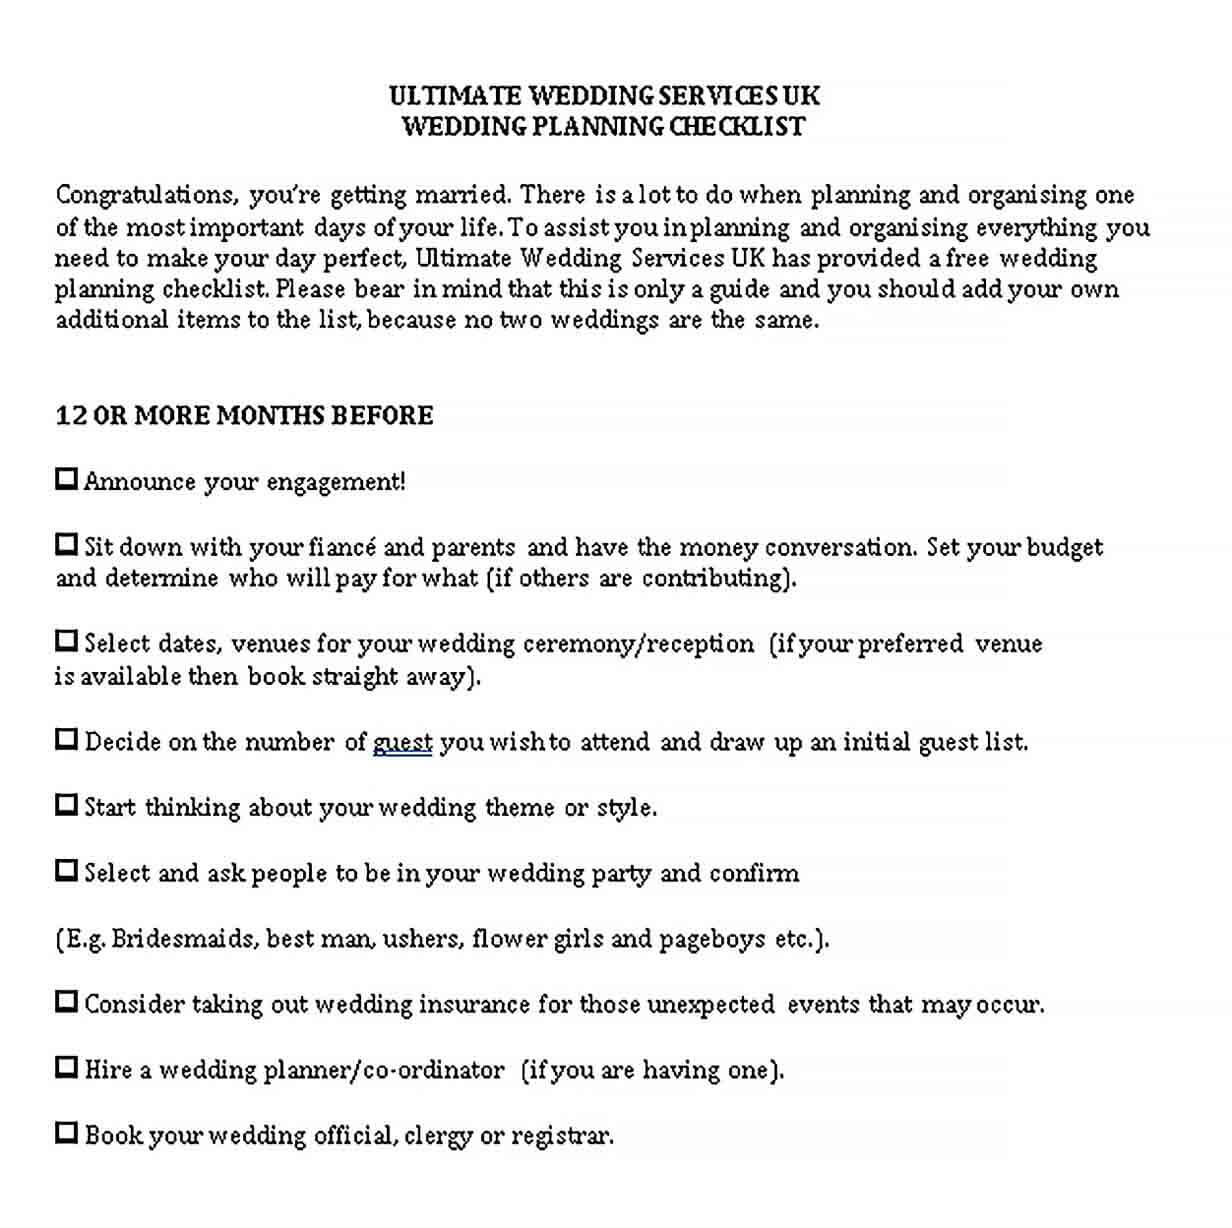 Sample Wedding Services checklist